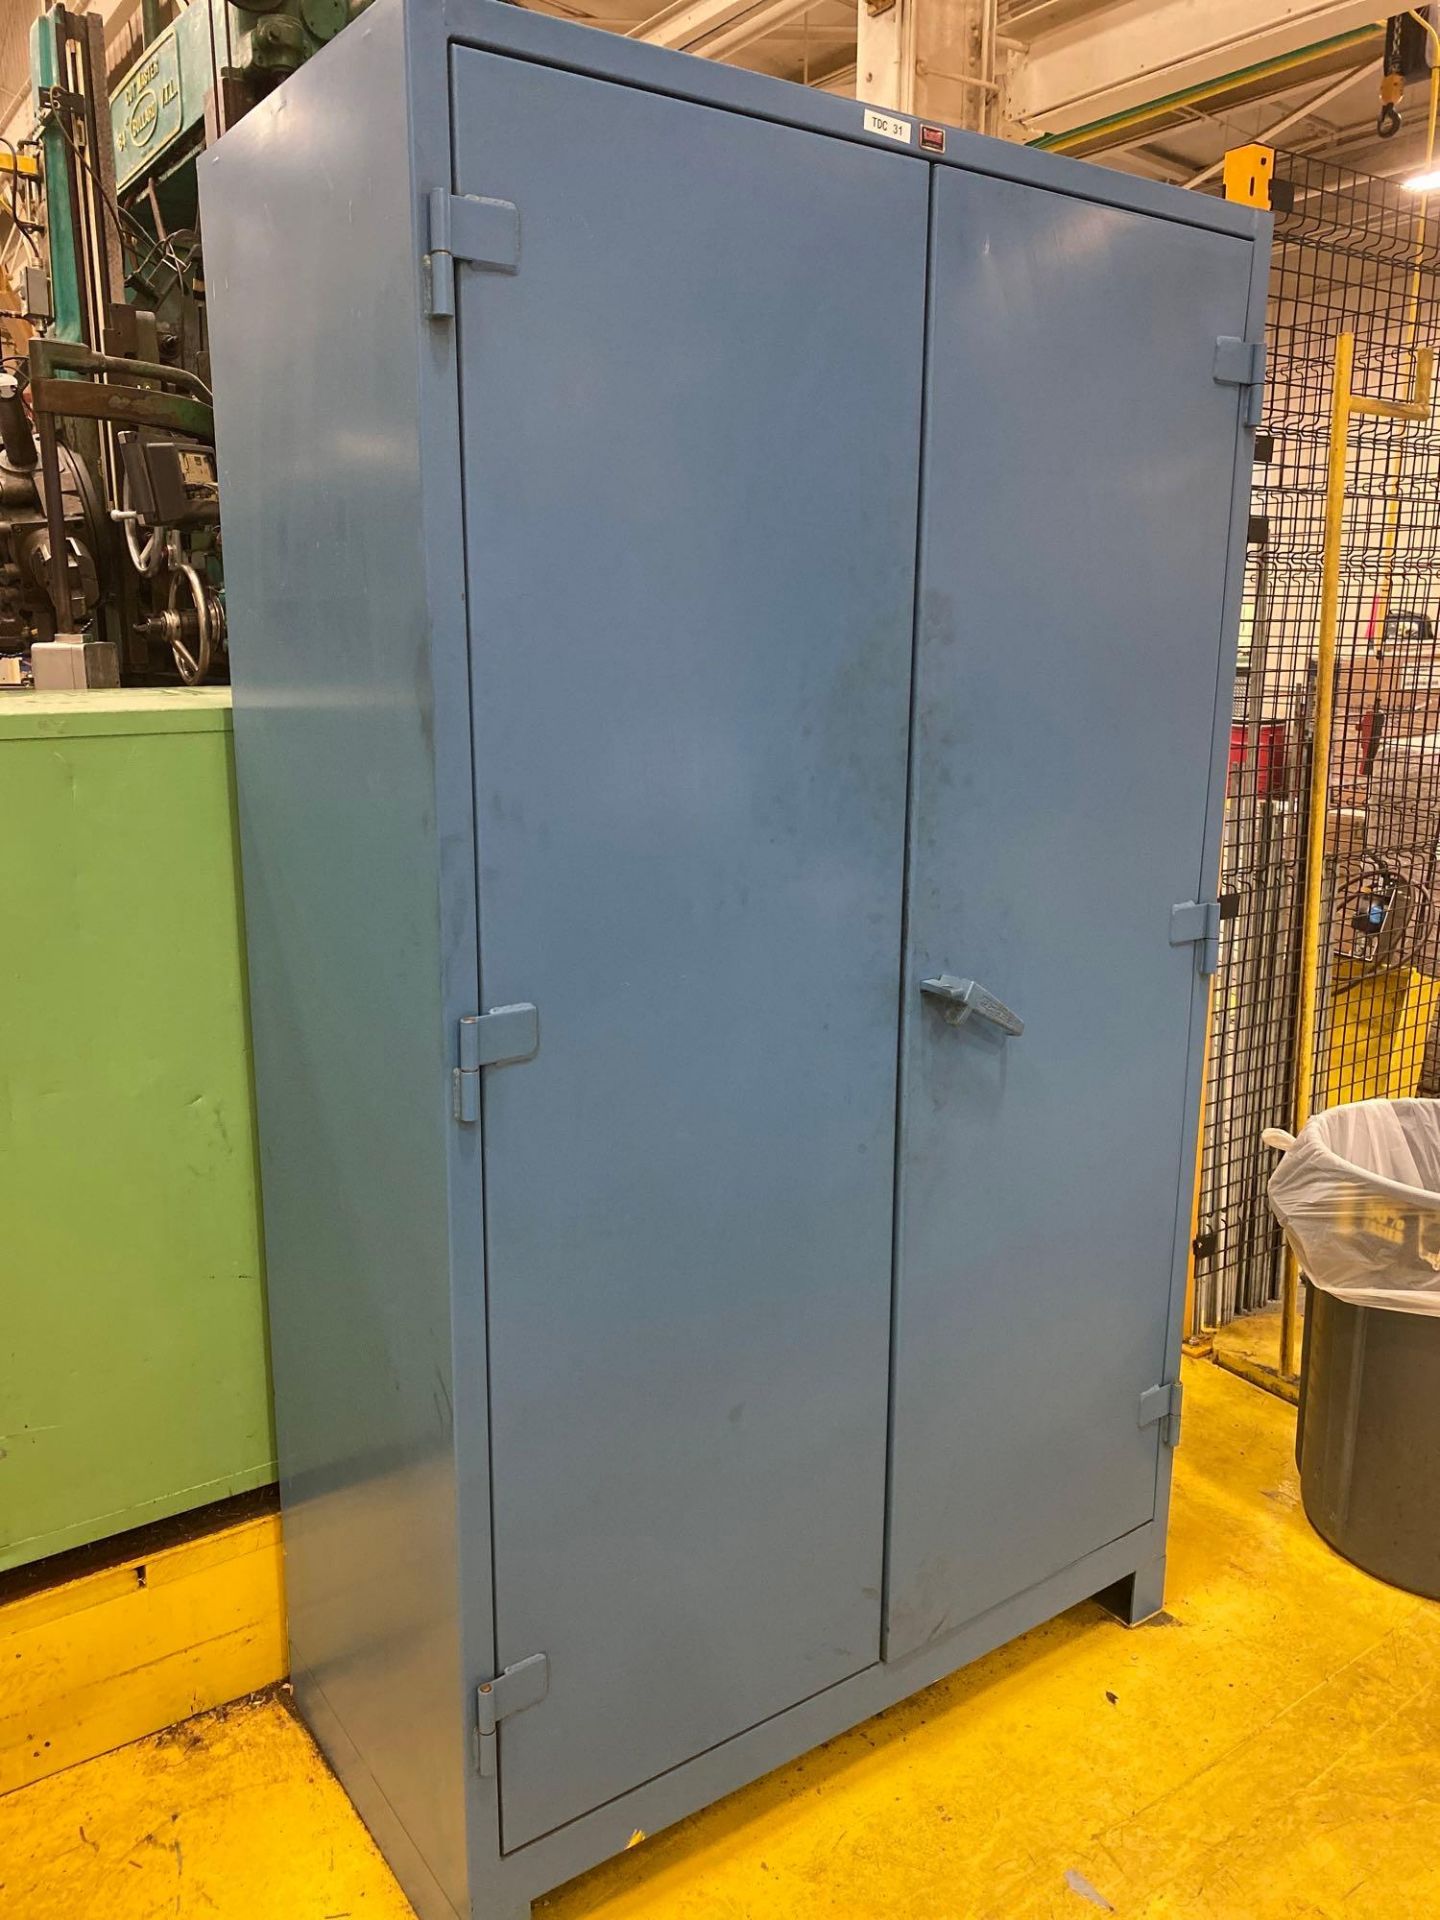 2 Door HD Lyon Cabinet w/ Tooling for Bullard Cutmaster VTL - Image 2 of 5